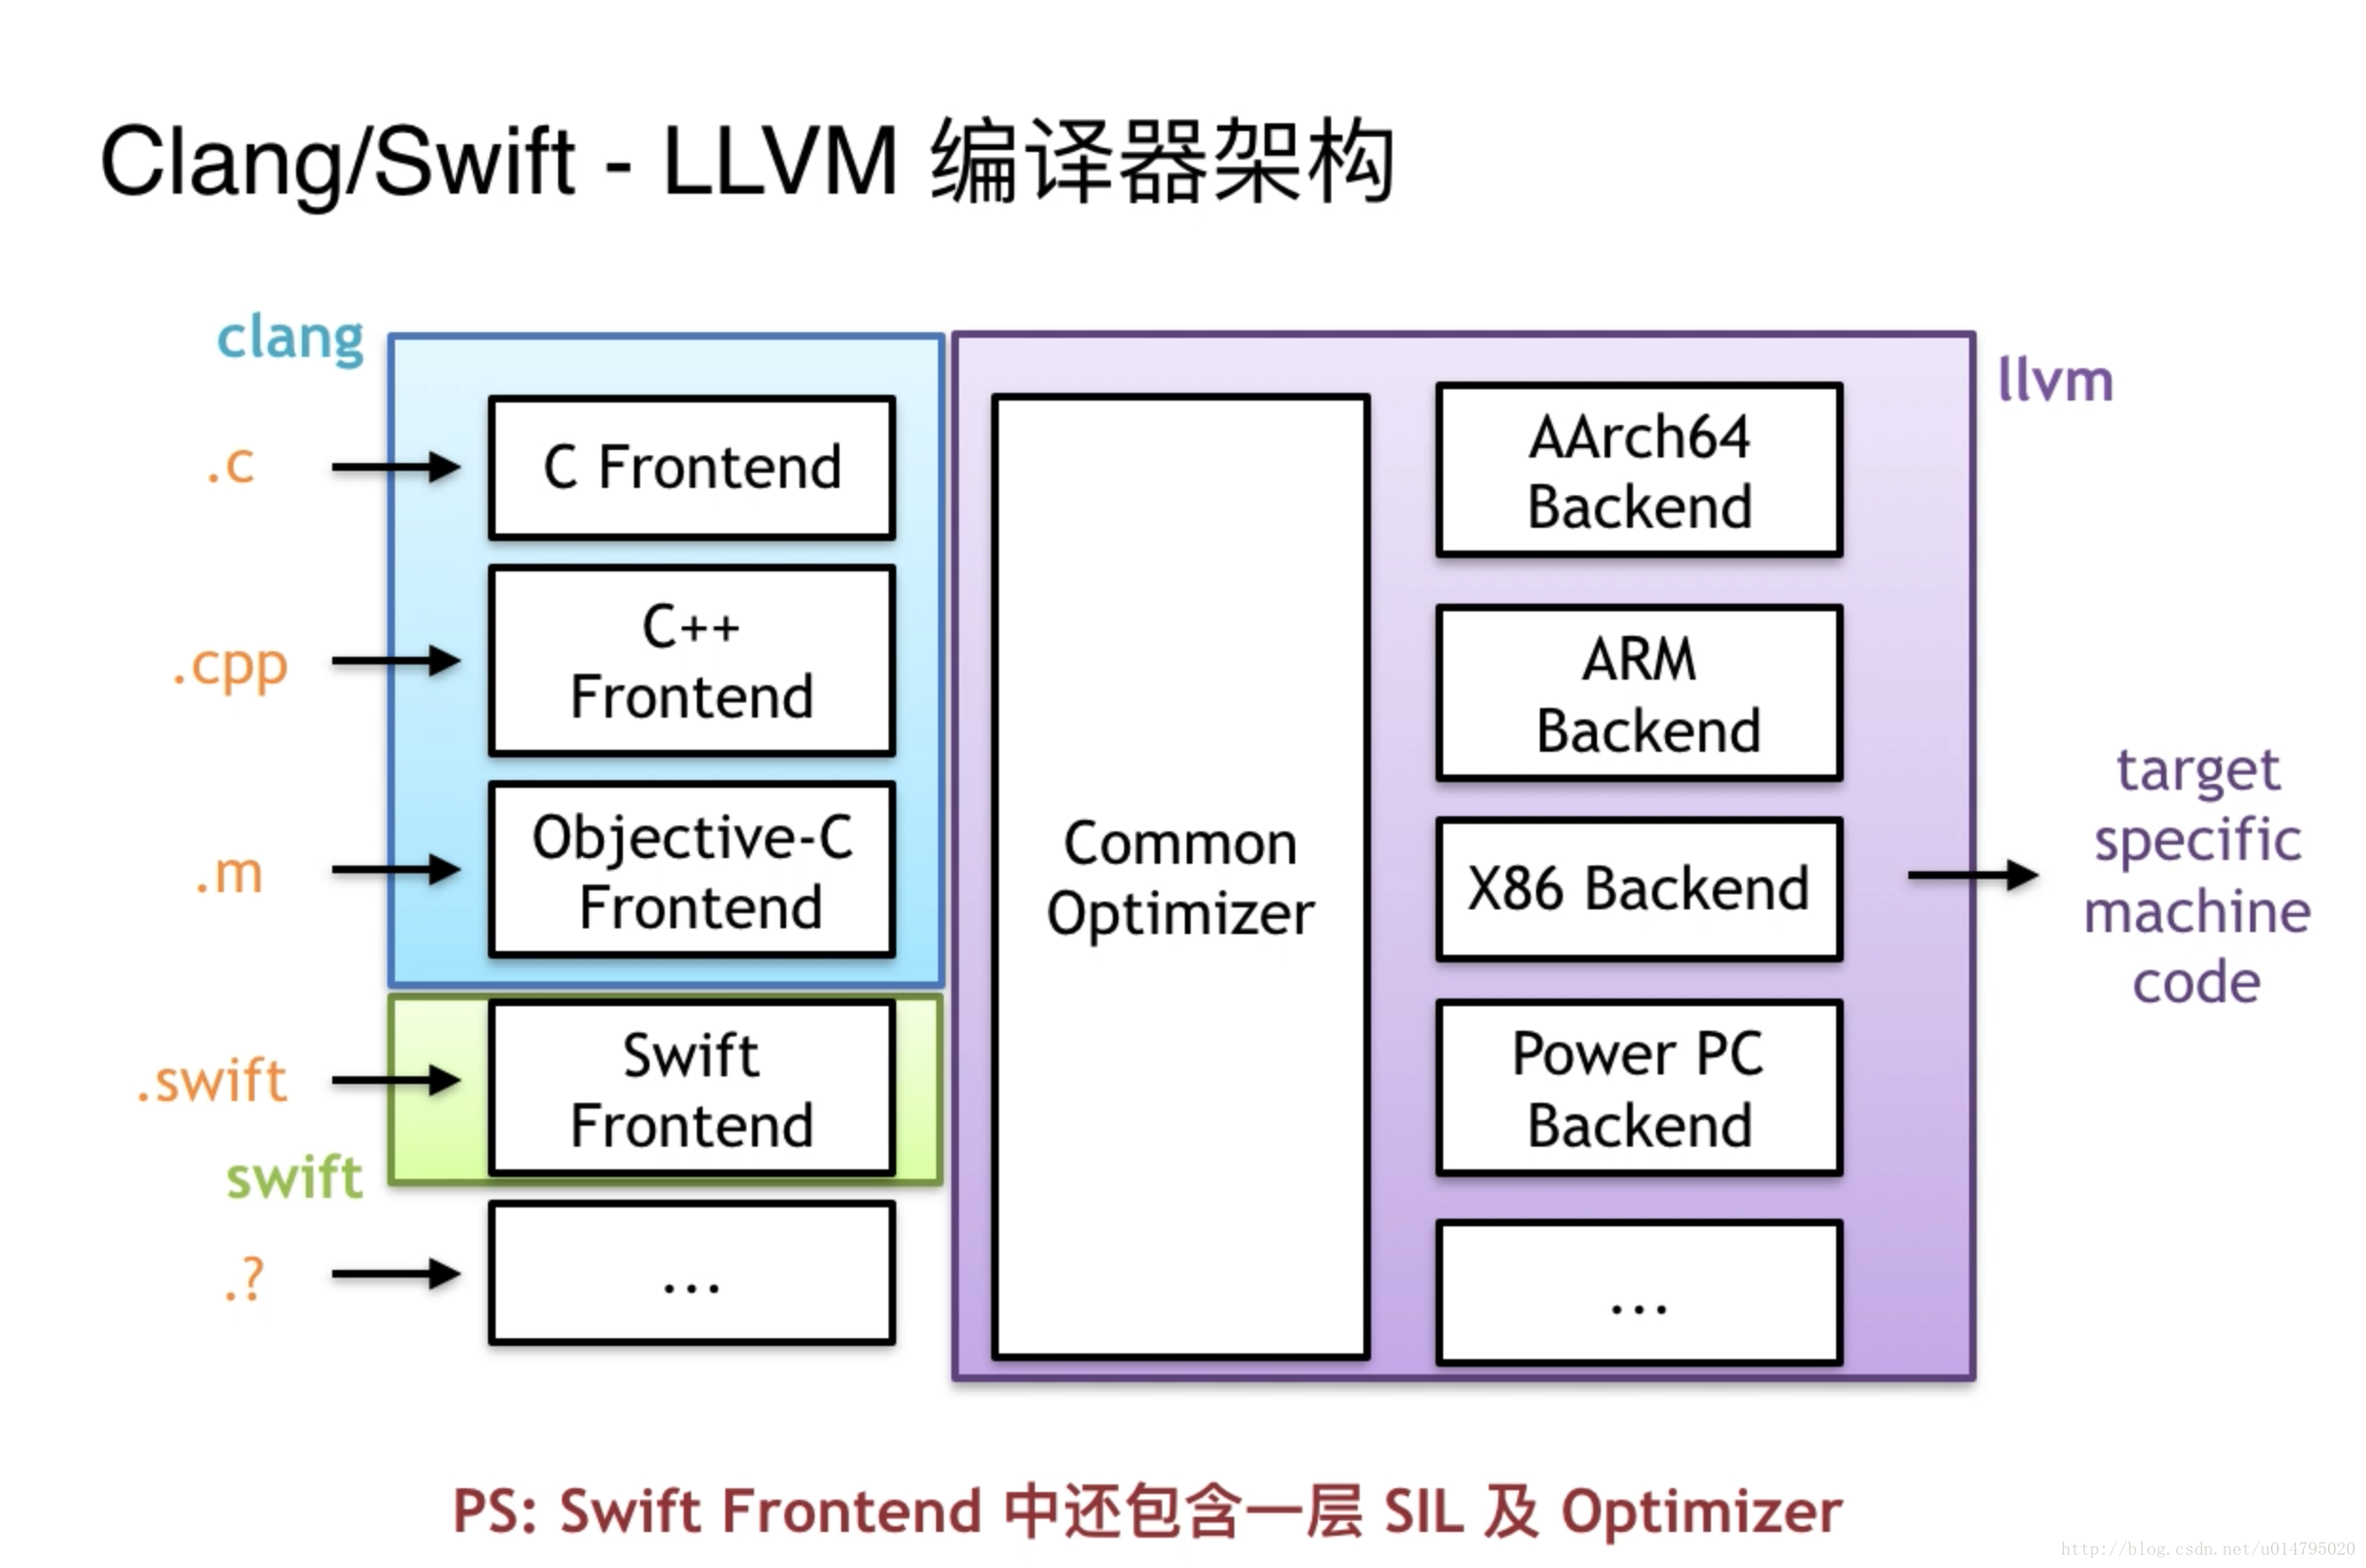 Clang/Swift - LLVM 編譯器架構